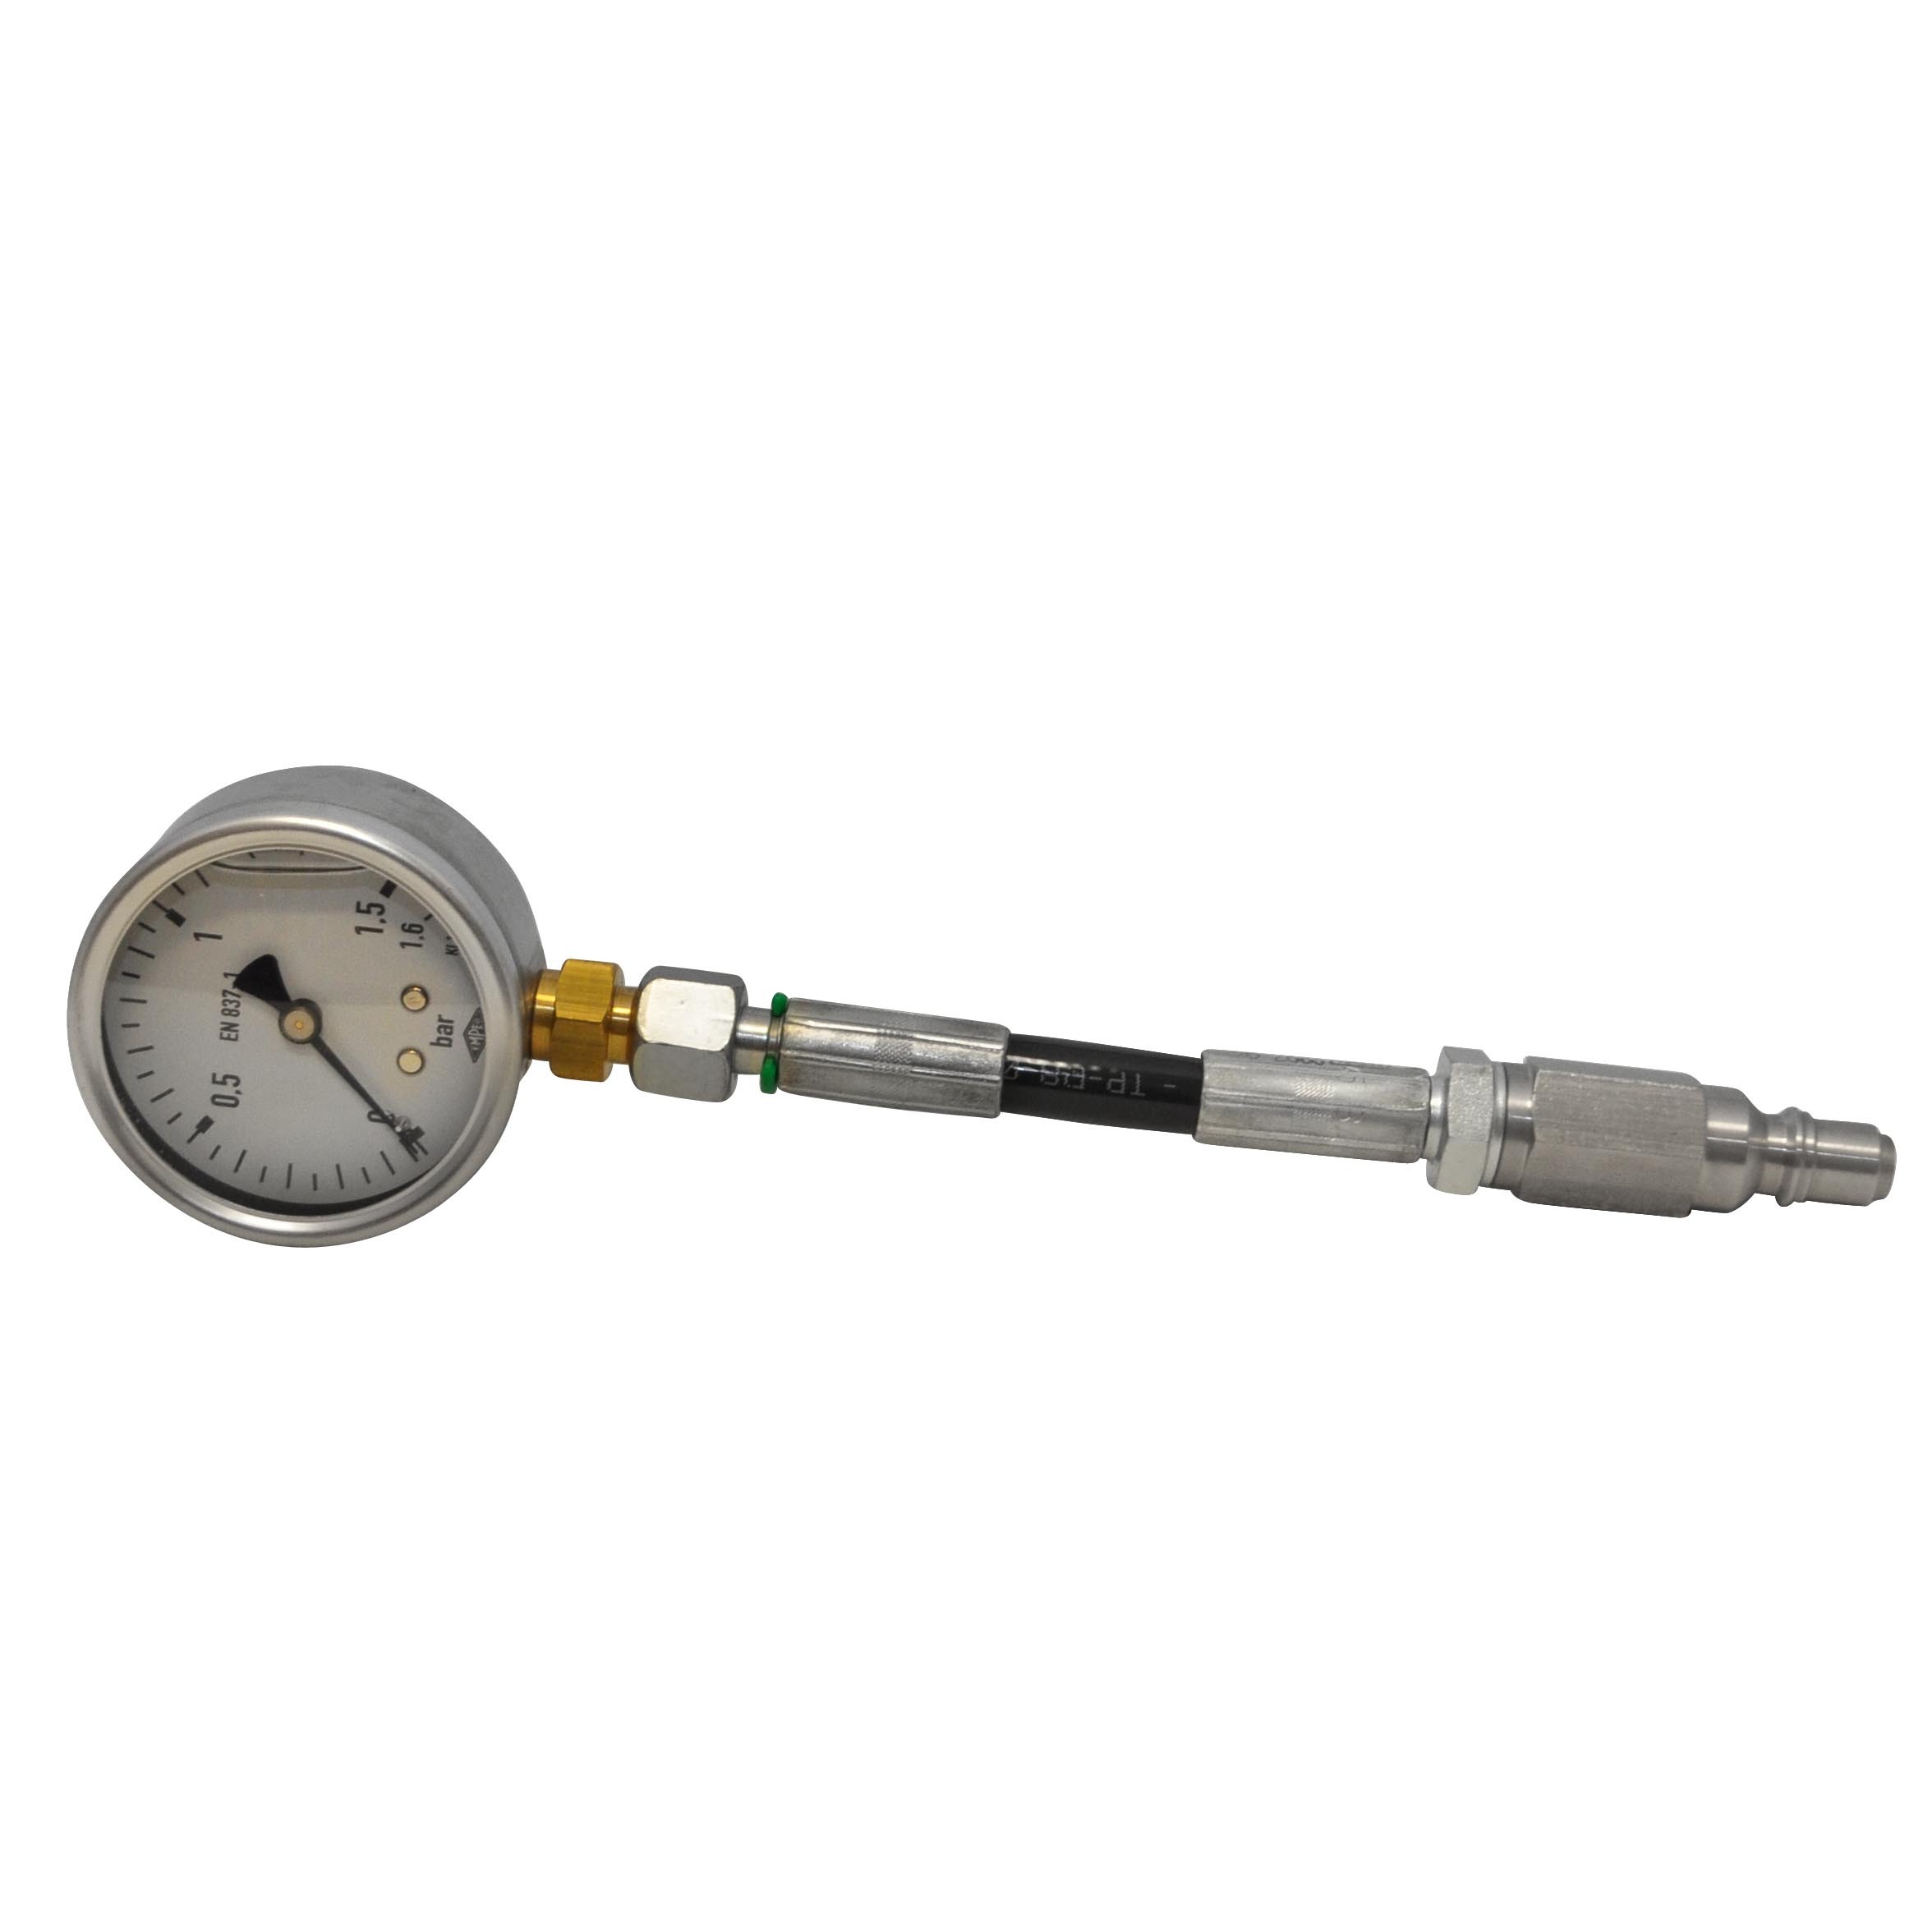 Pressure gauge 0 to 1.6 bar - Class 1.6